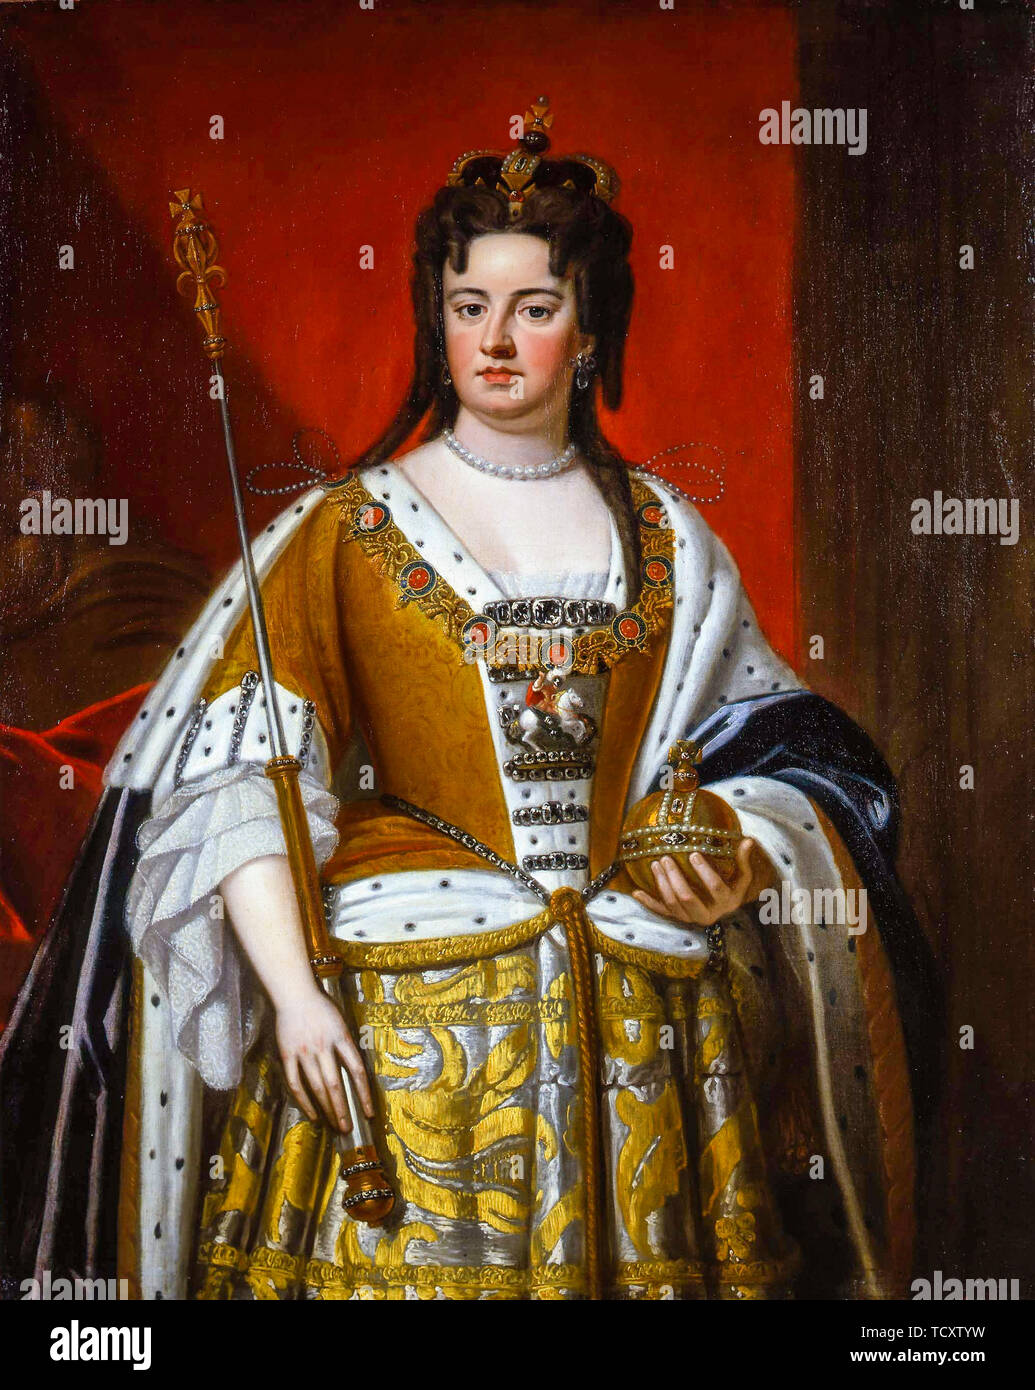 Godfrey Kneller, Queen Anne of Great Britain, Coronation portrait, portrait painting, 1705 Stock Photo